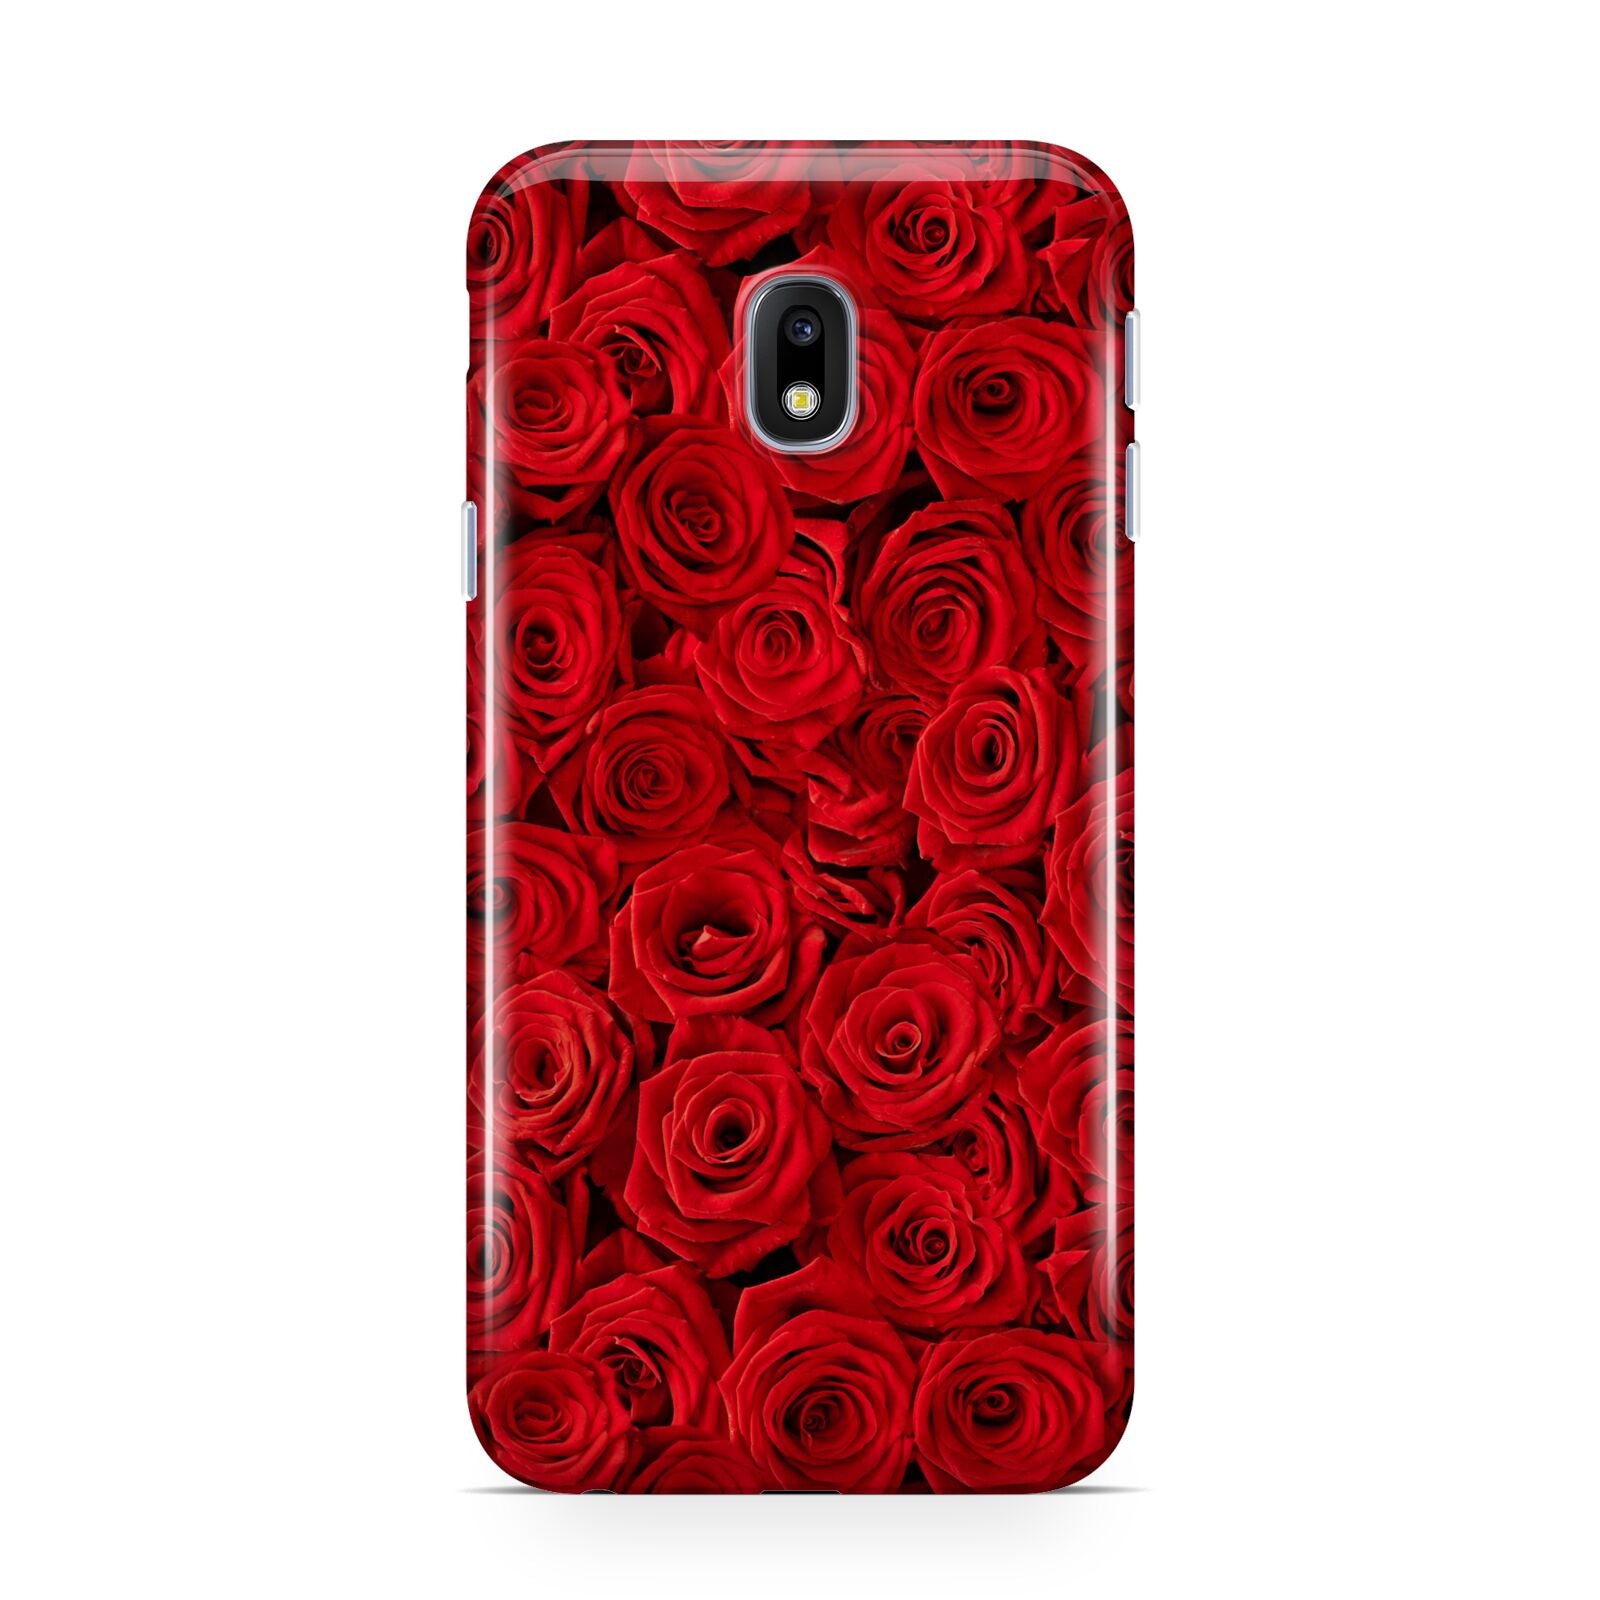 Red Rose Samsung Galaxy J3 2017 Case